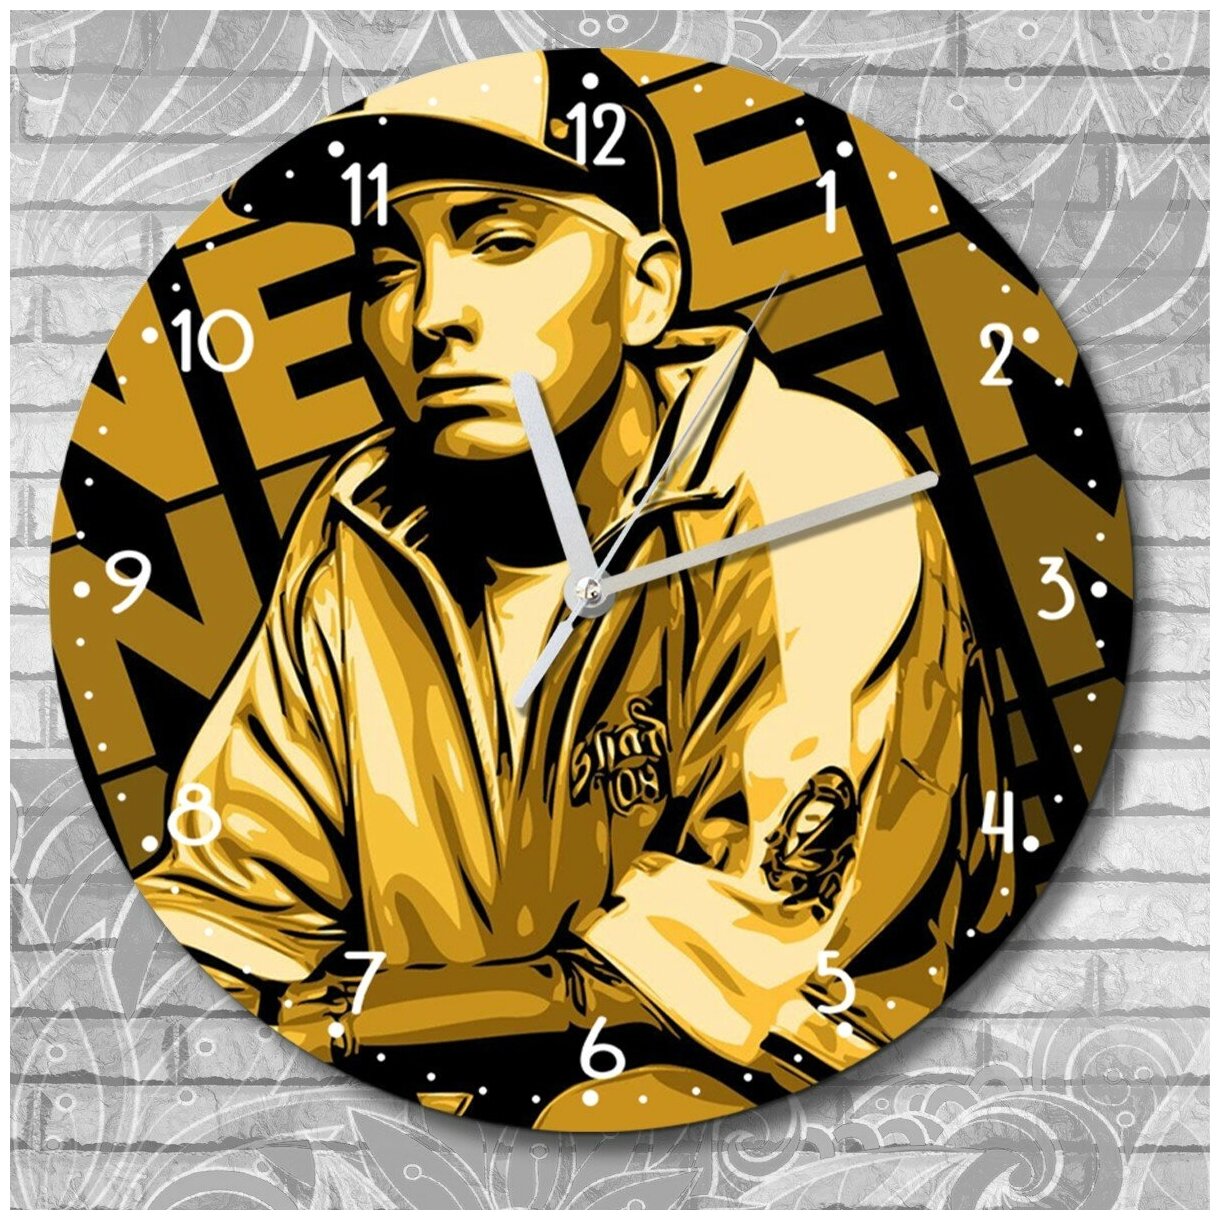 Настенные часы УФ музыка (music, rap, hip hop, sound, руки вверх, hands up, style, graffiti, life) - 2047